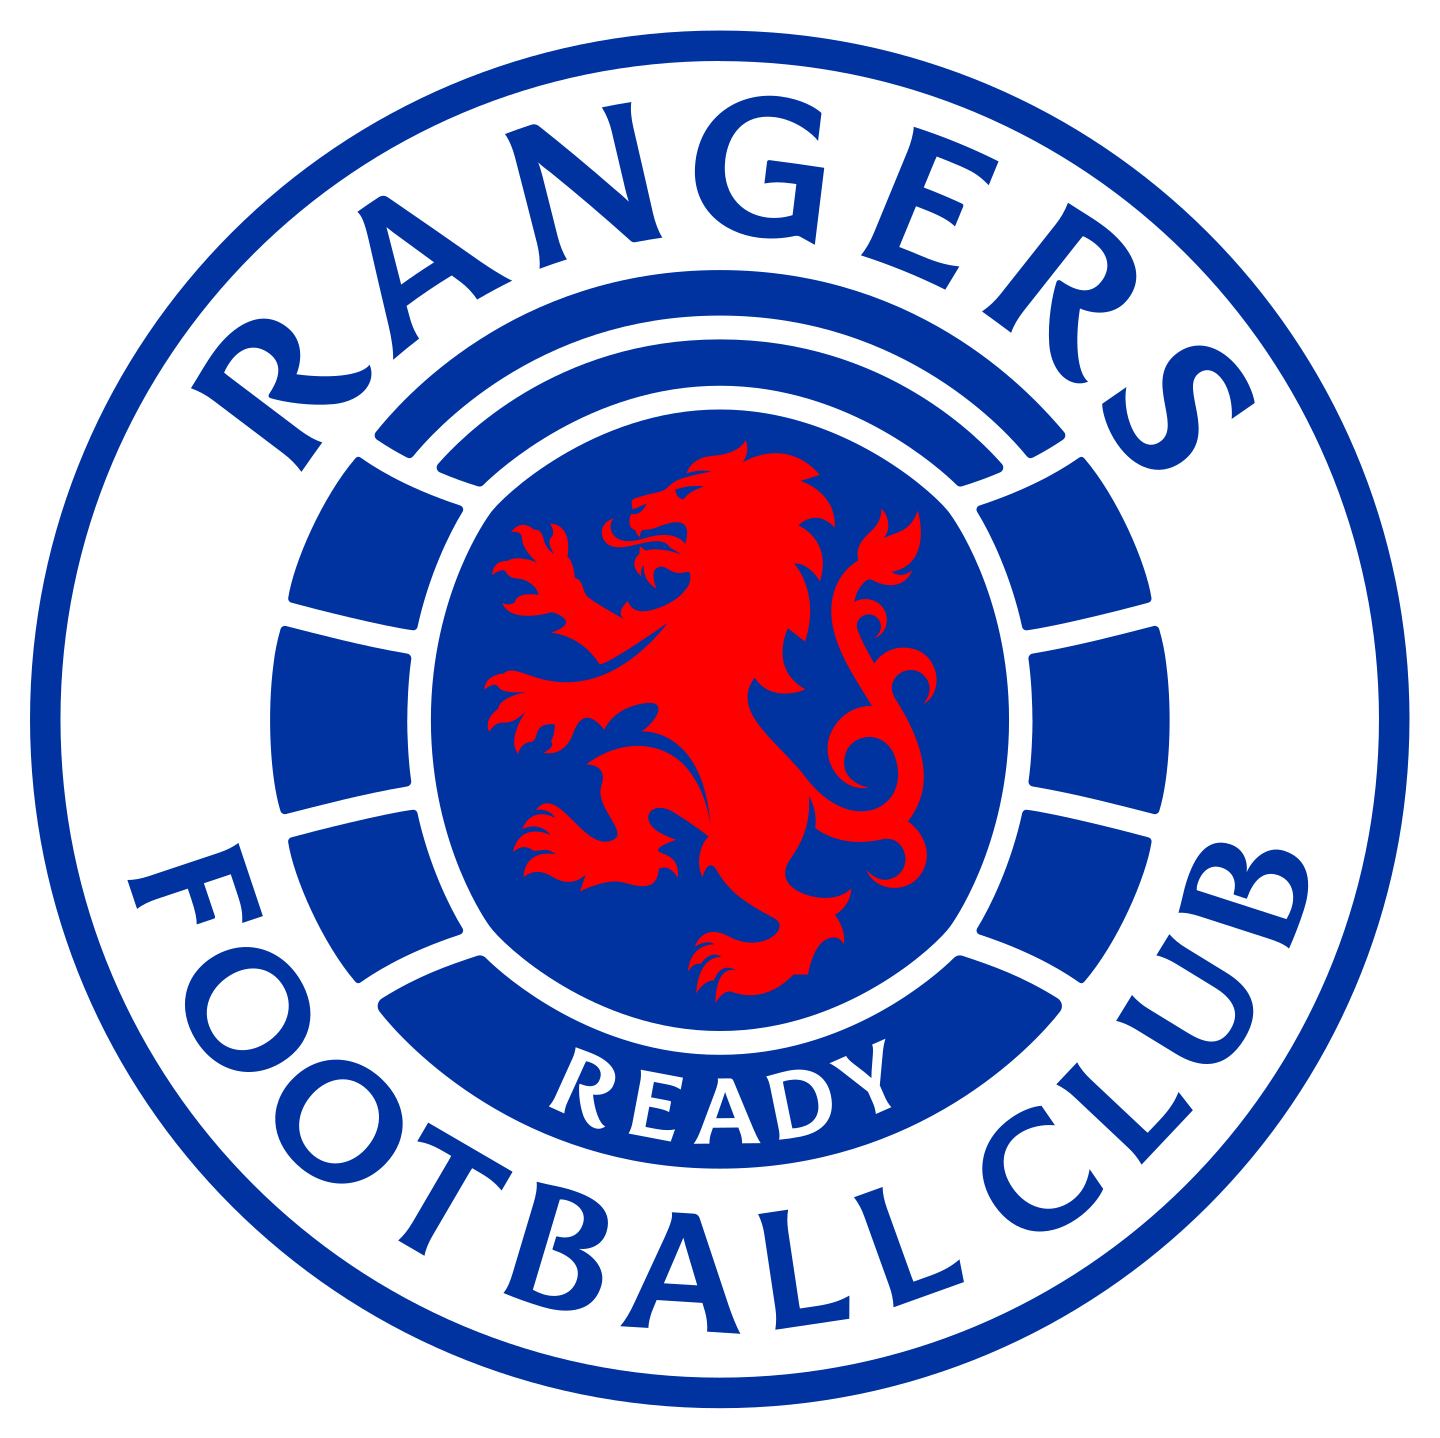 rangers fc logo 2 - Rangers FC Logo